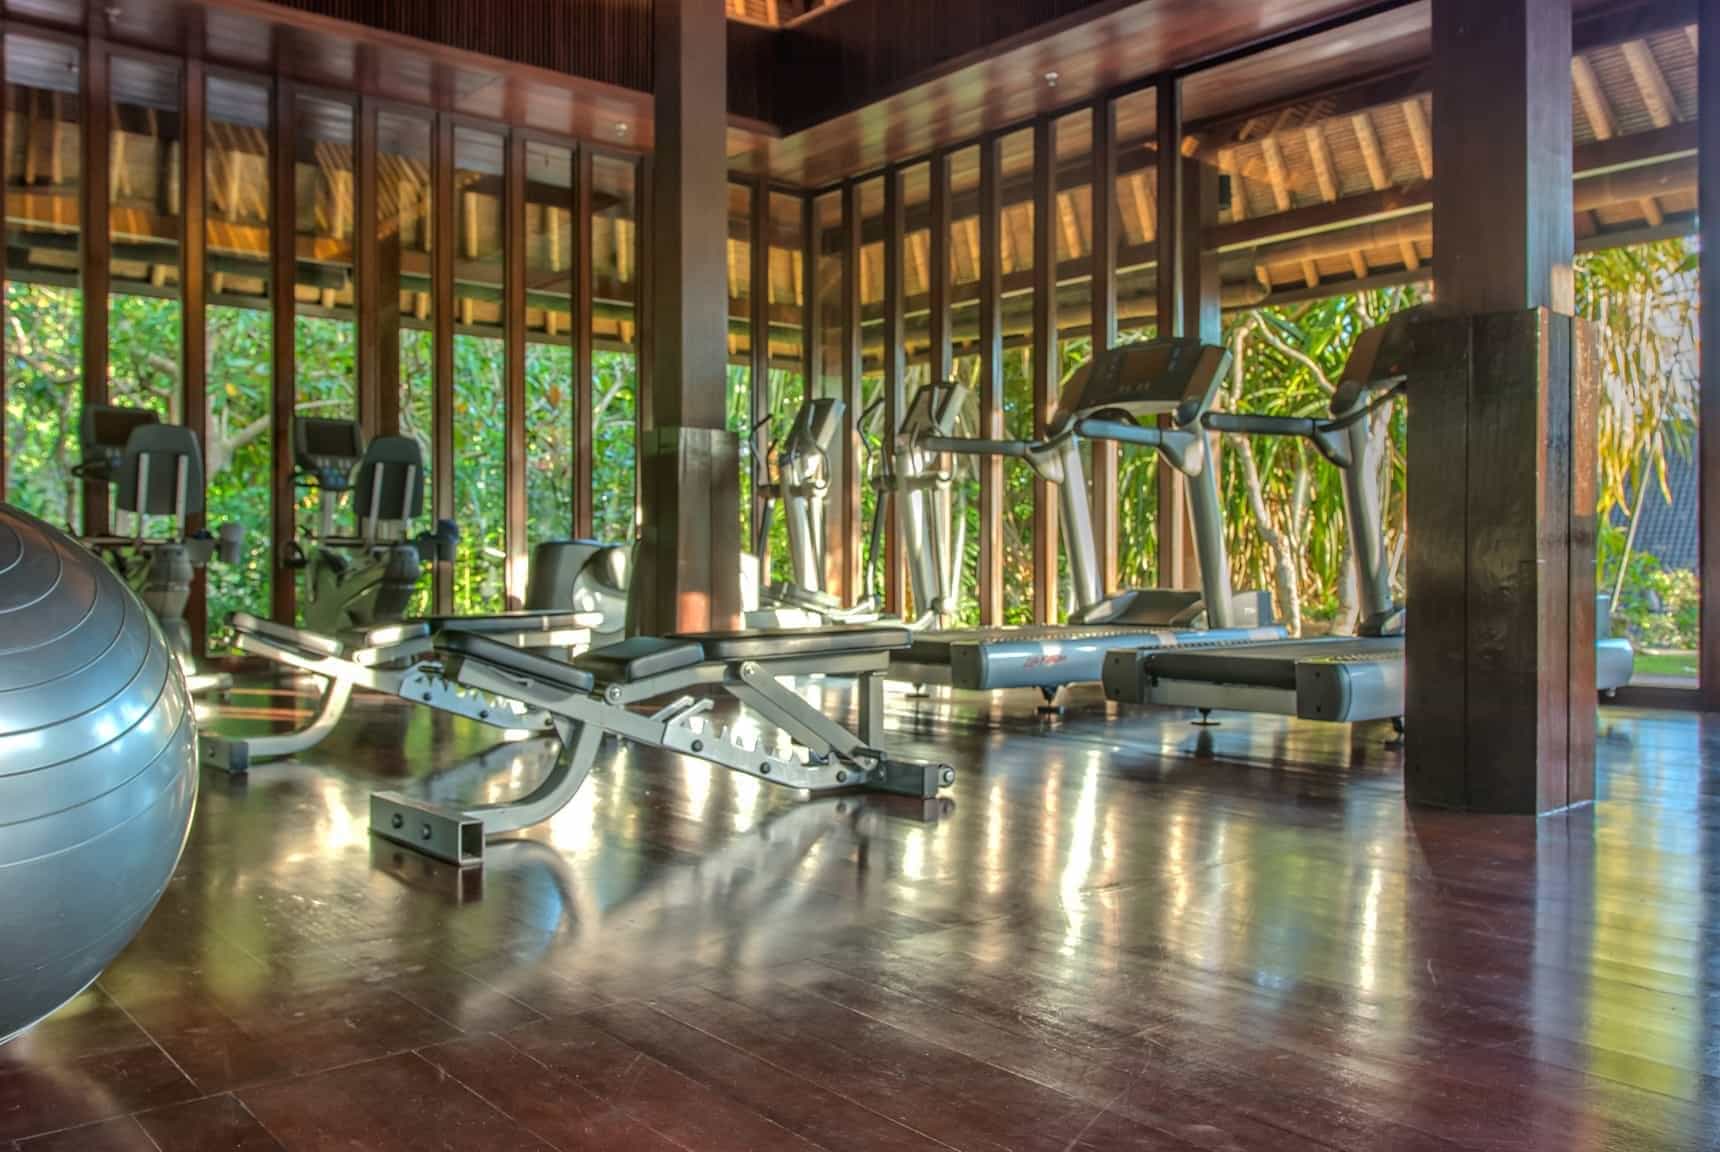 Bulgari - Uluwatu, Bali Indonesia (Bali hotel photography by master photographer Rick Carmichael of LuxViz)